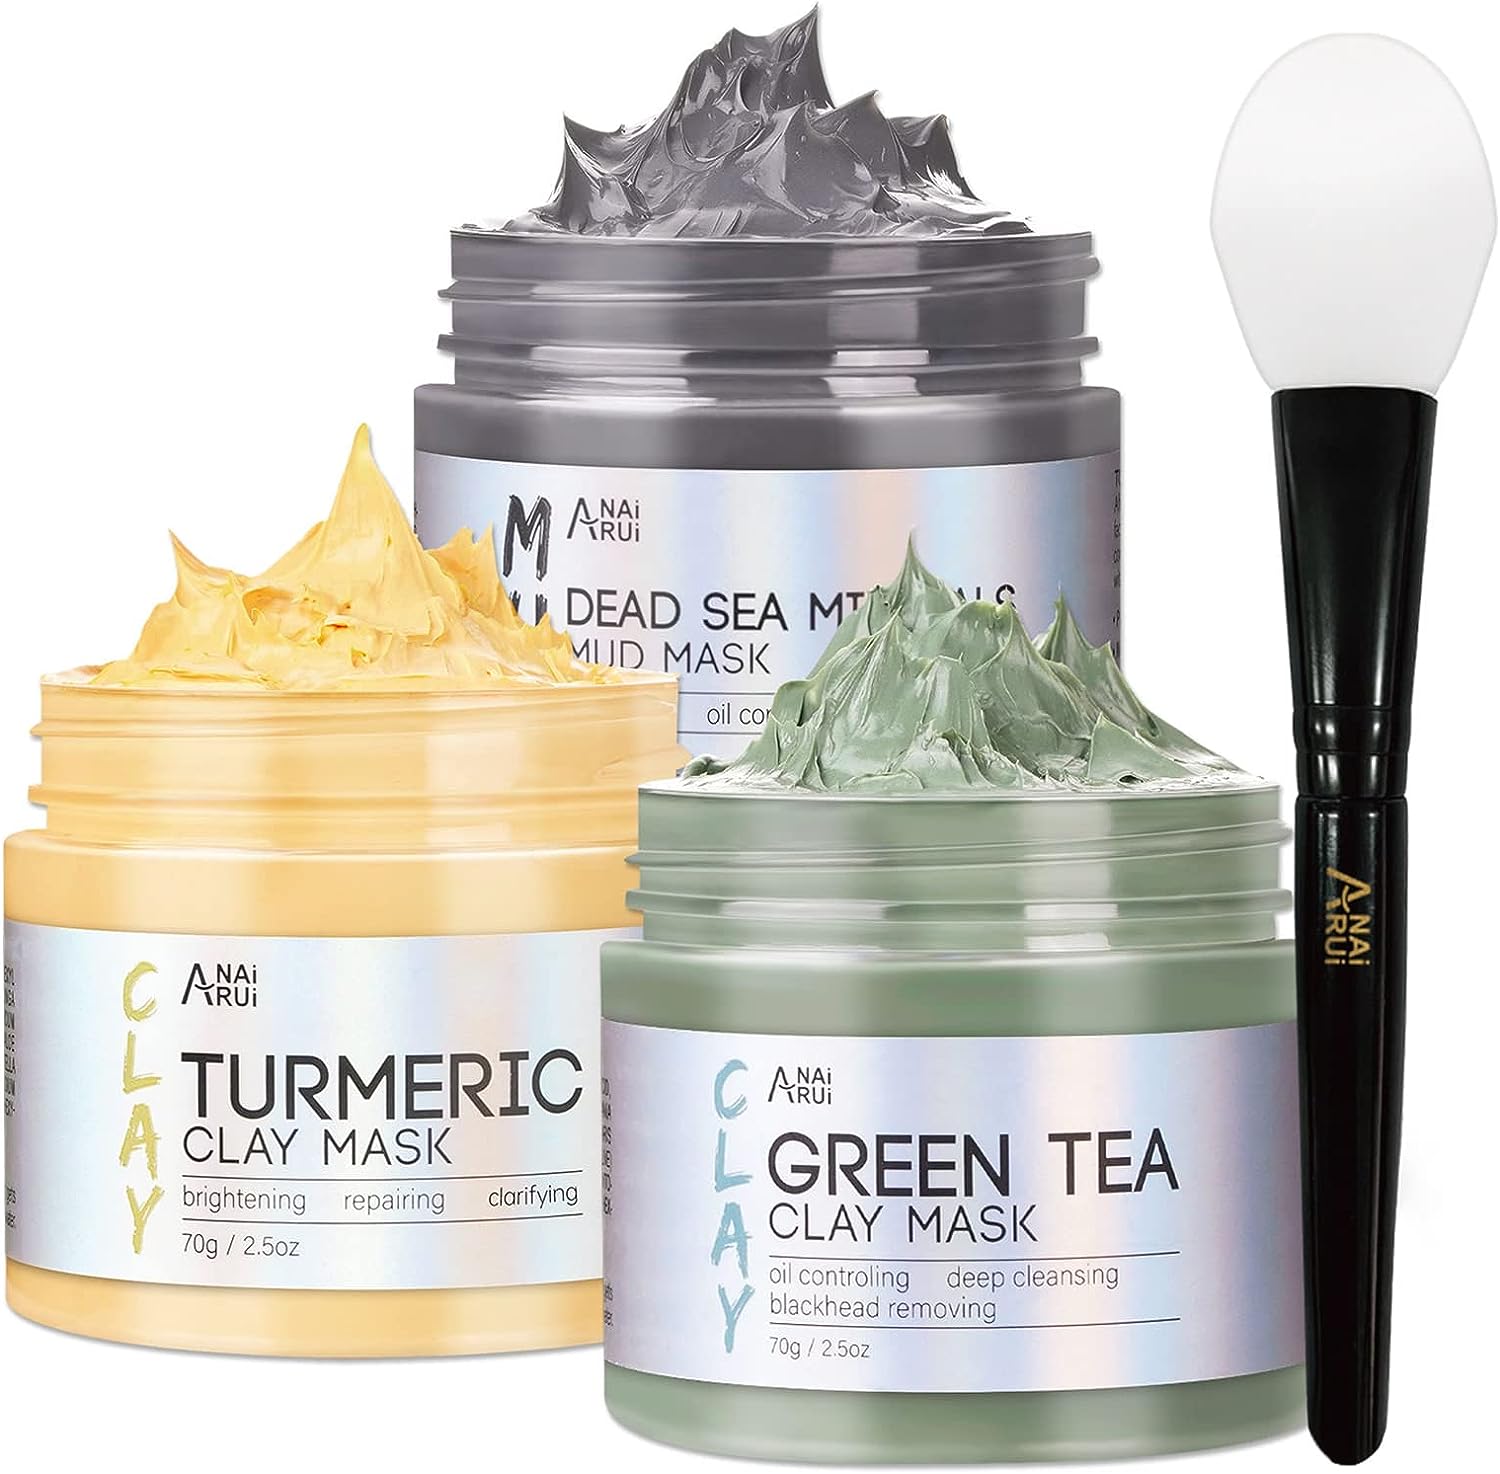 ANAI RUI Turmeric Clay Mask - Green Tea and Dead Sea Minerals, Spa Facial Mask Set for Pore Treatment/Smooth/Clarify, Indoor Use, 2.5 oz each